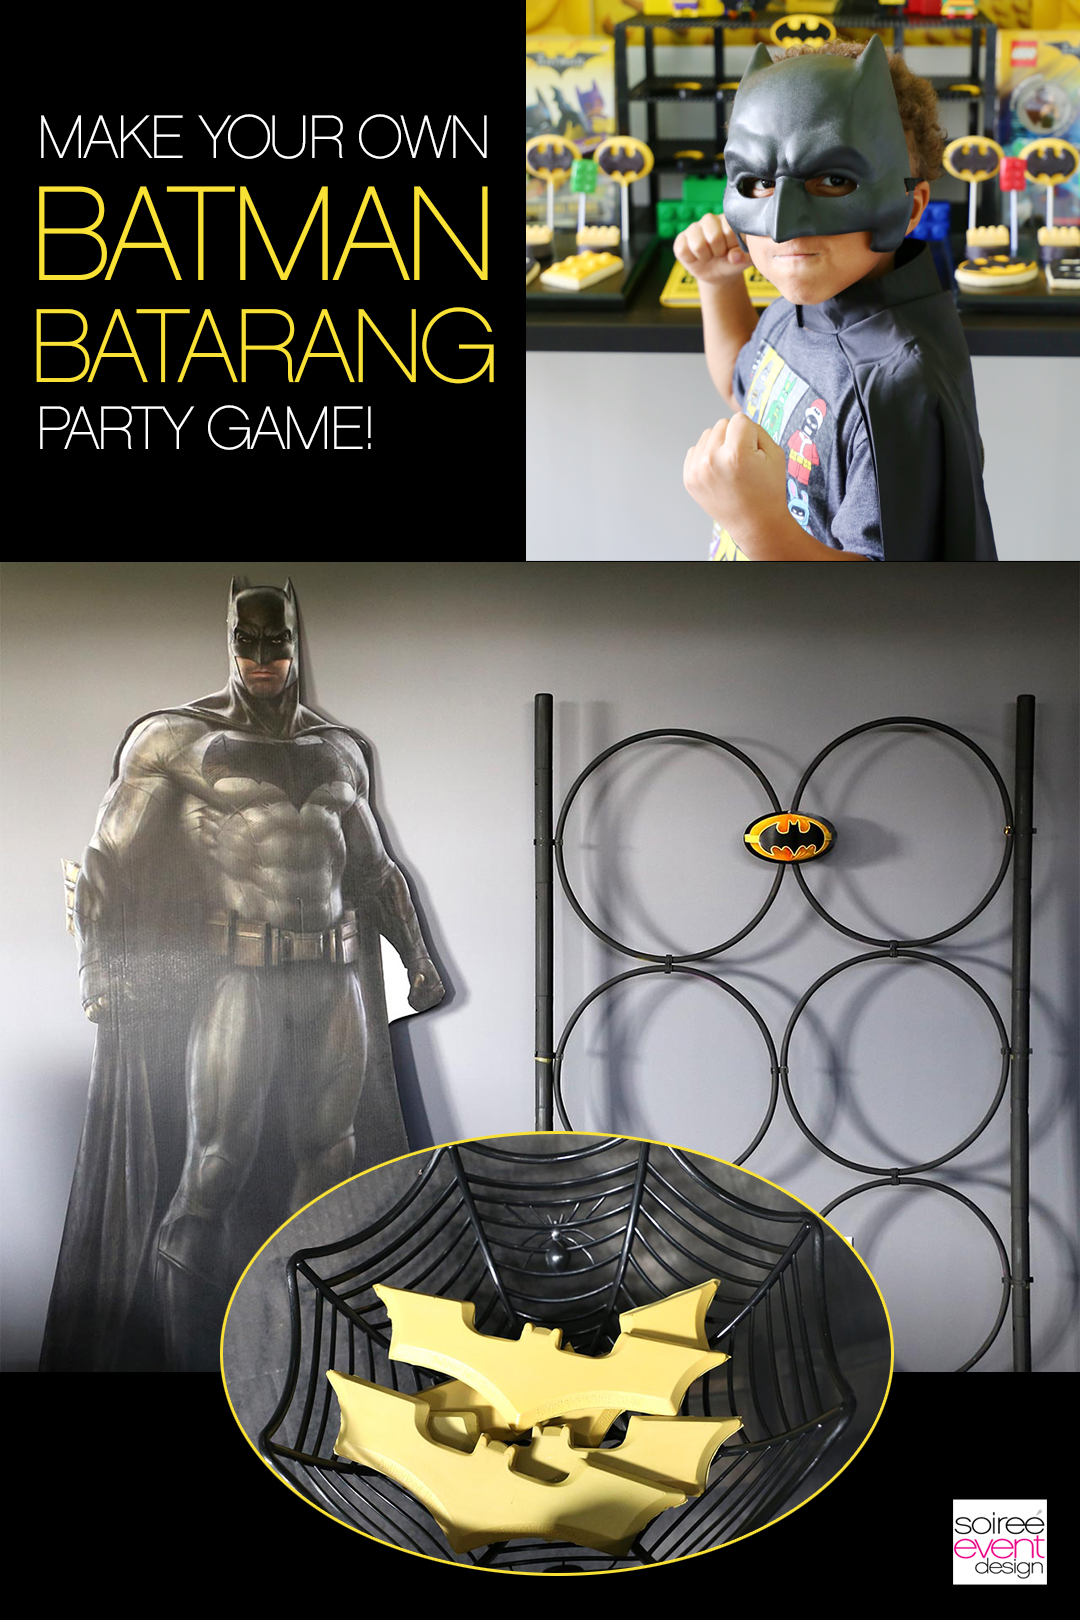 LEGO Batman Party Activites - DIY Batman Batarang Game